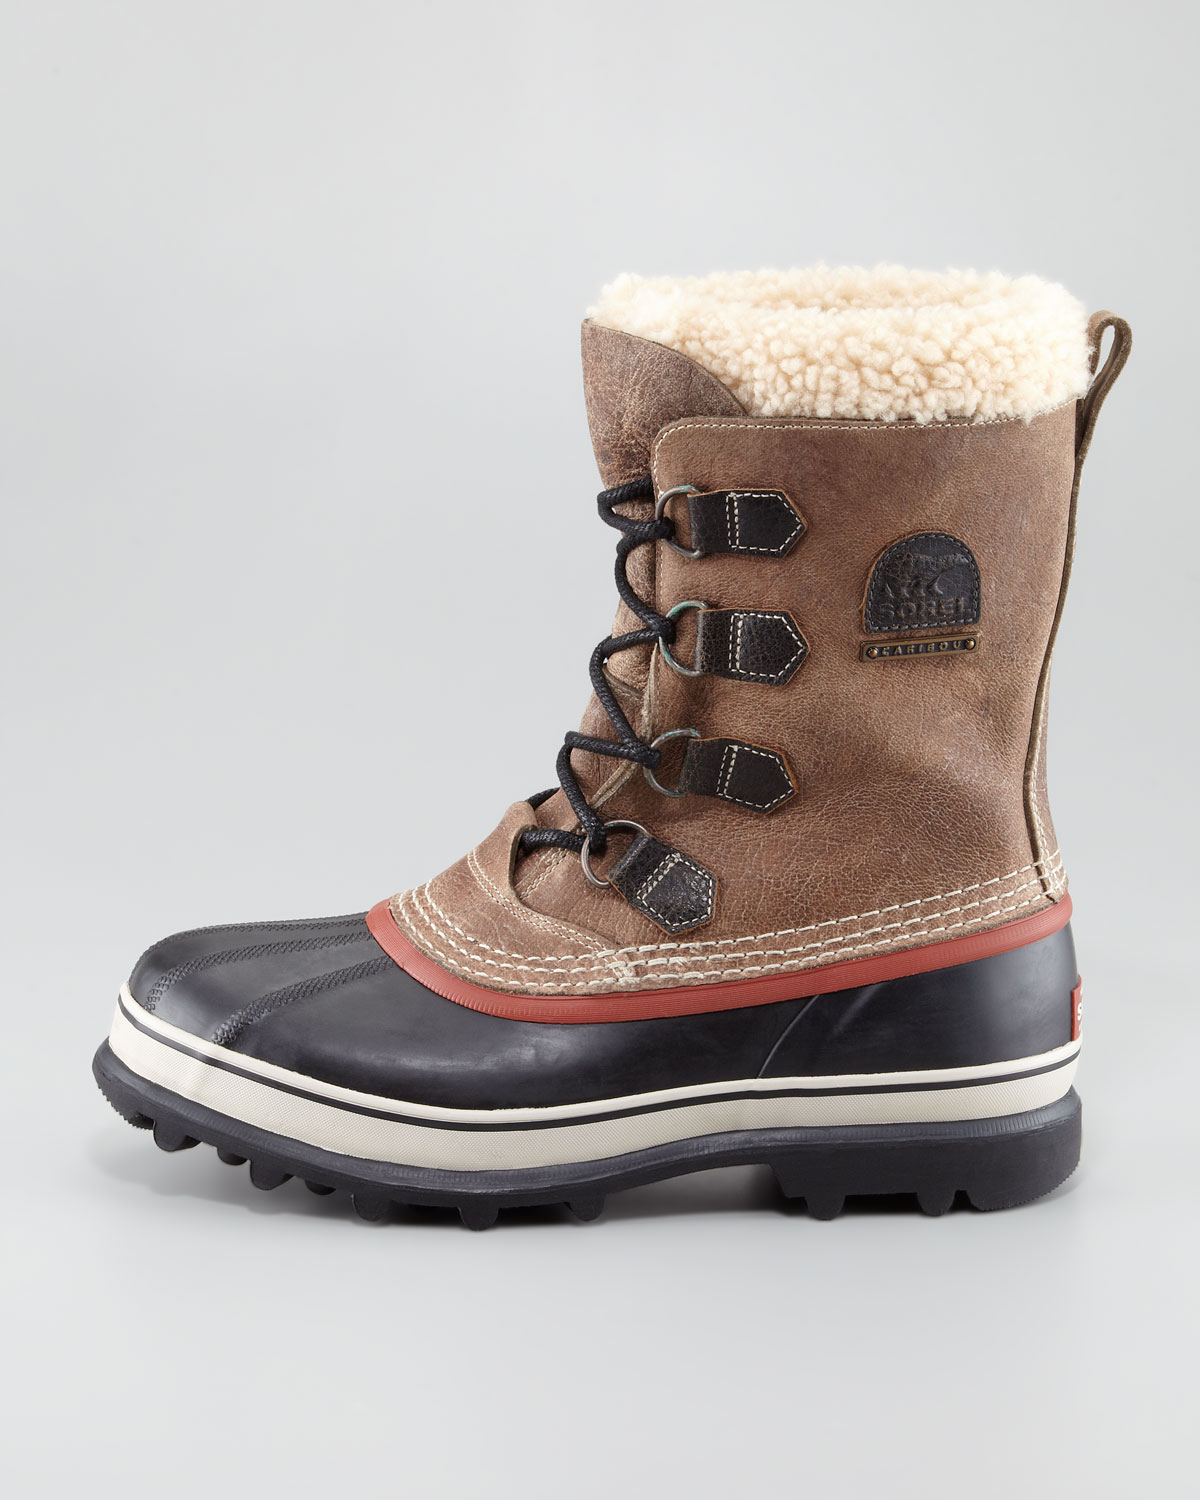 Lyst - Sorel Caribou Reserve Winter Boot in Brown for Men